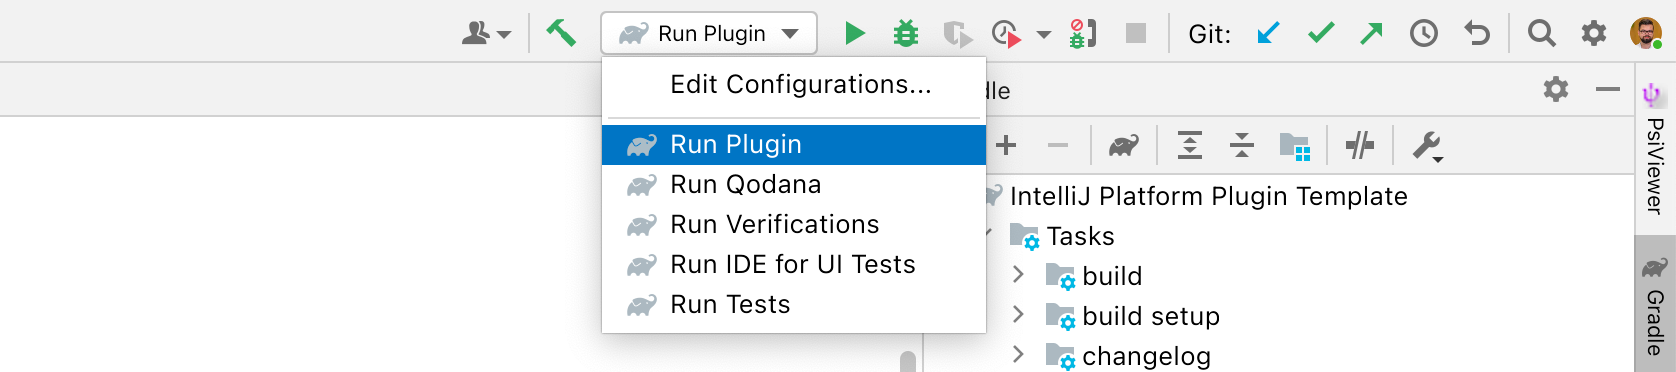 run-debug-configurations.png